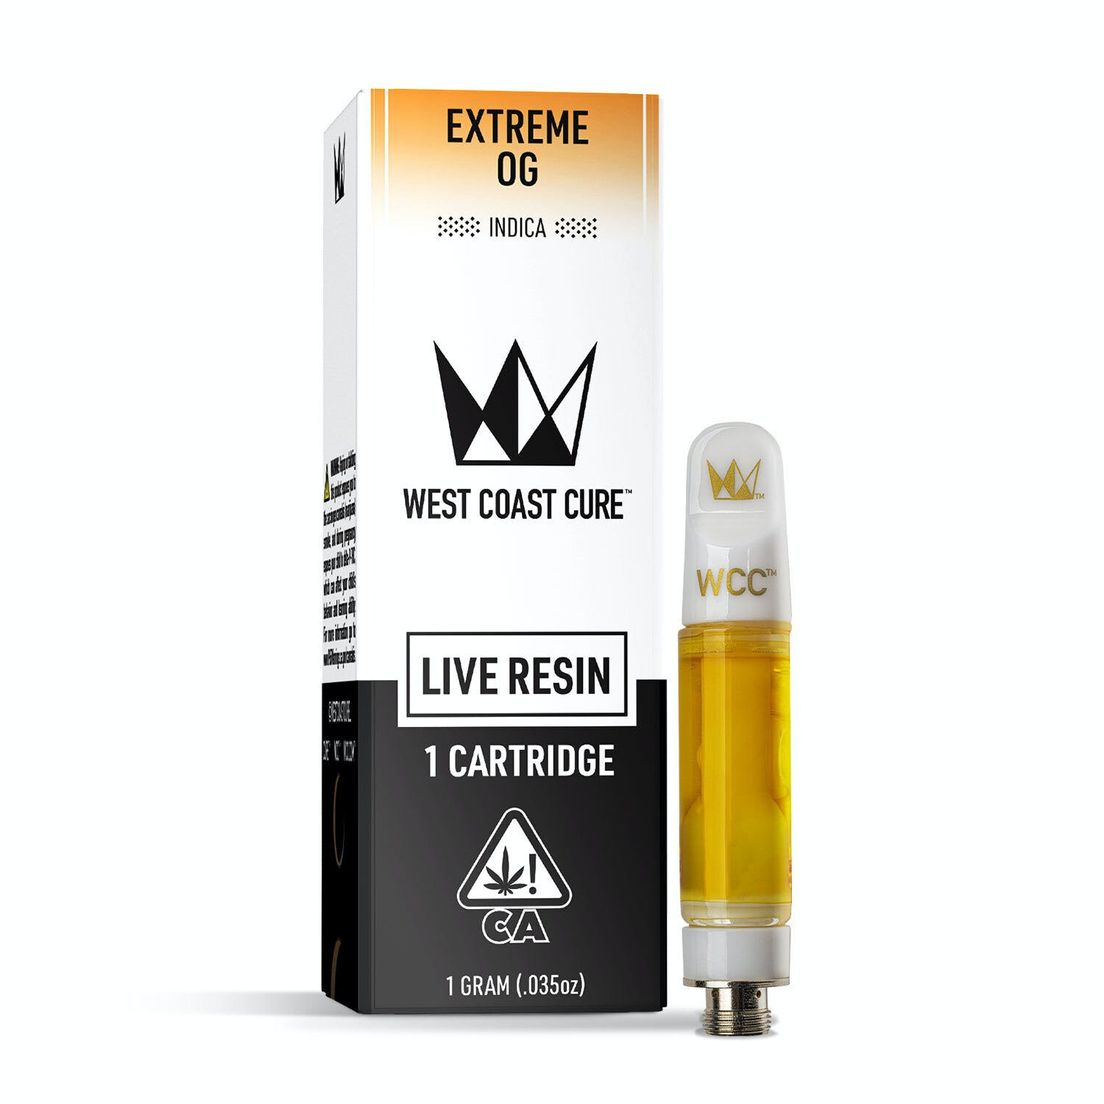 West Coast Cure - Extreme OG Live Resin Cartridge - 1G 1g